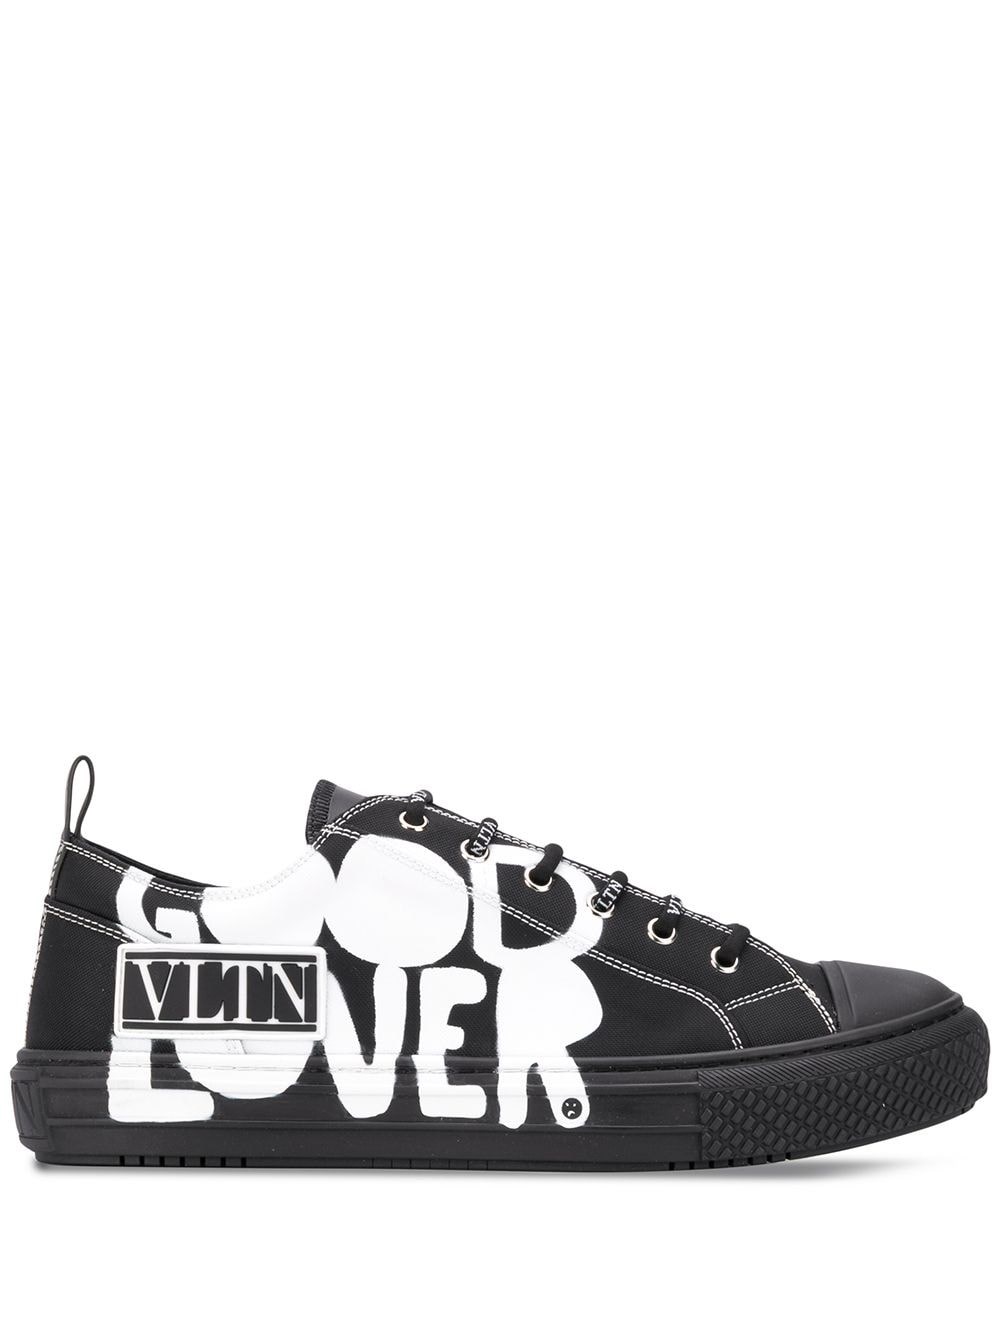 valentino garavani shoes sneakers